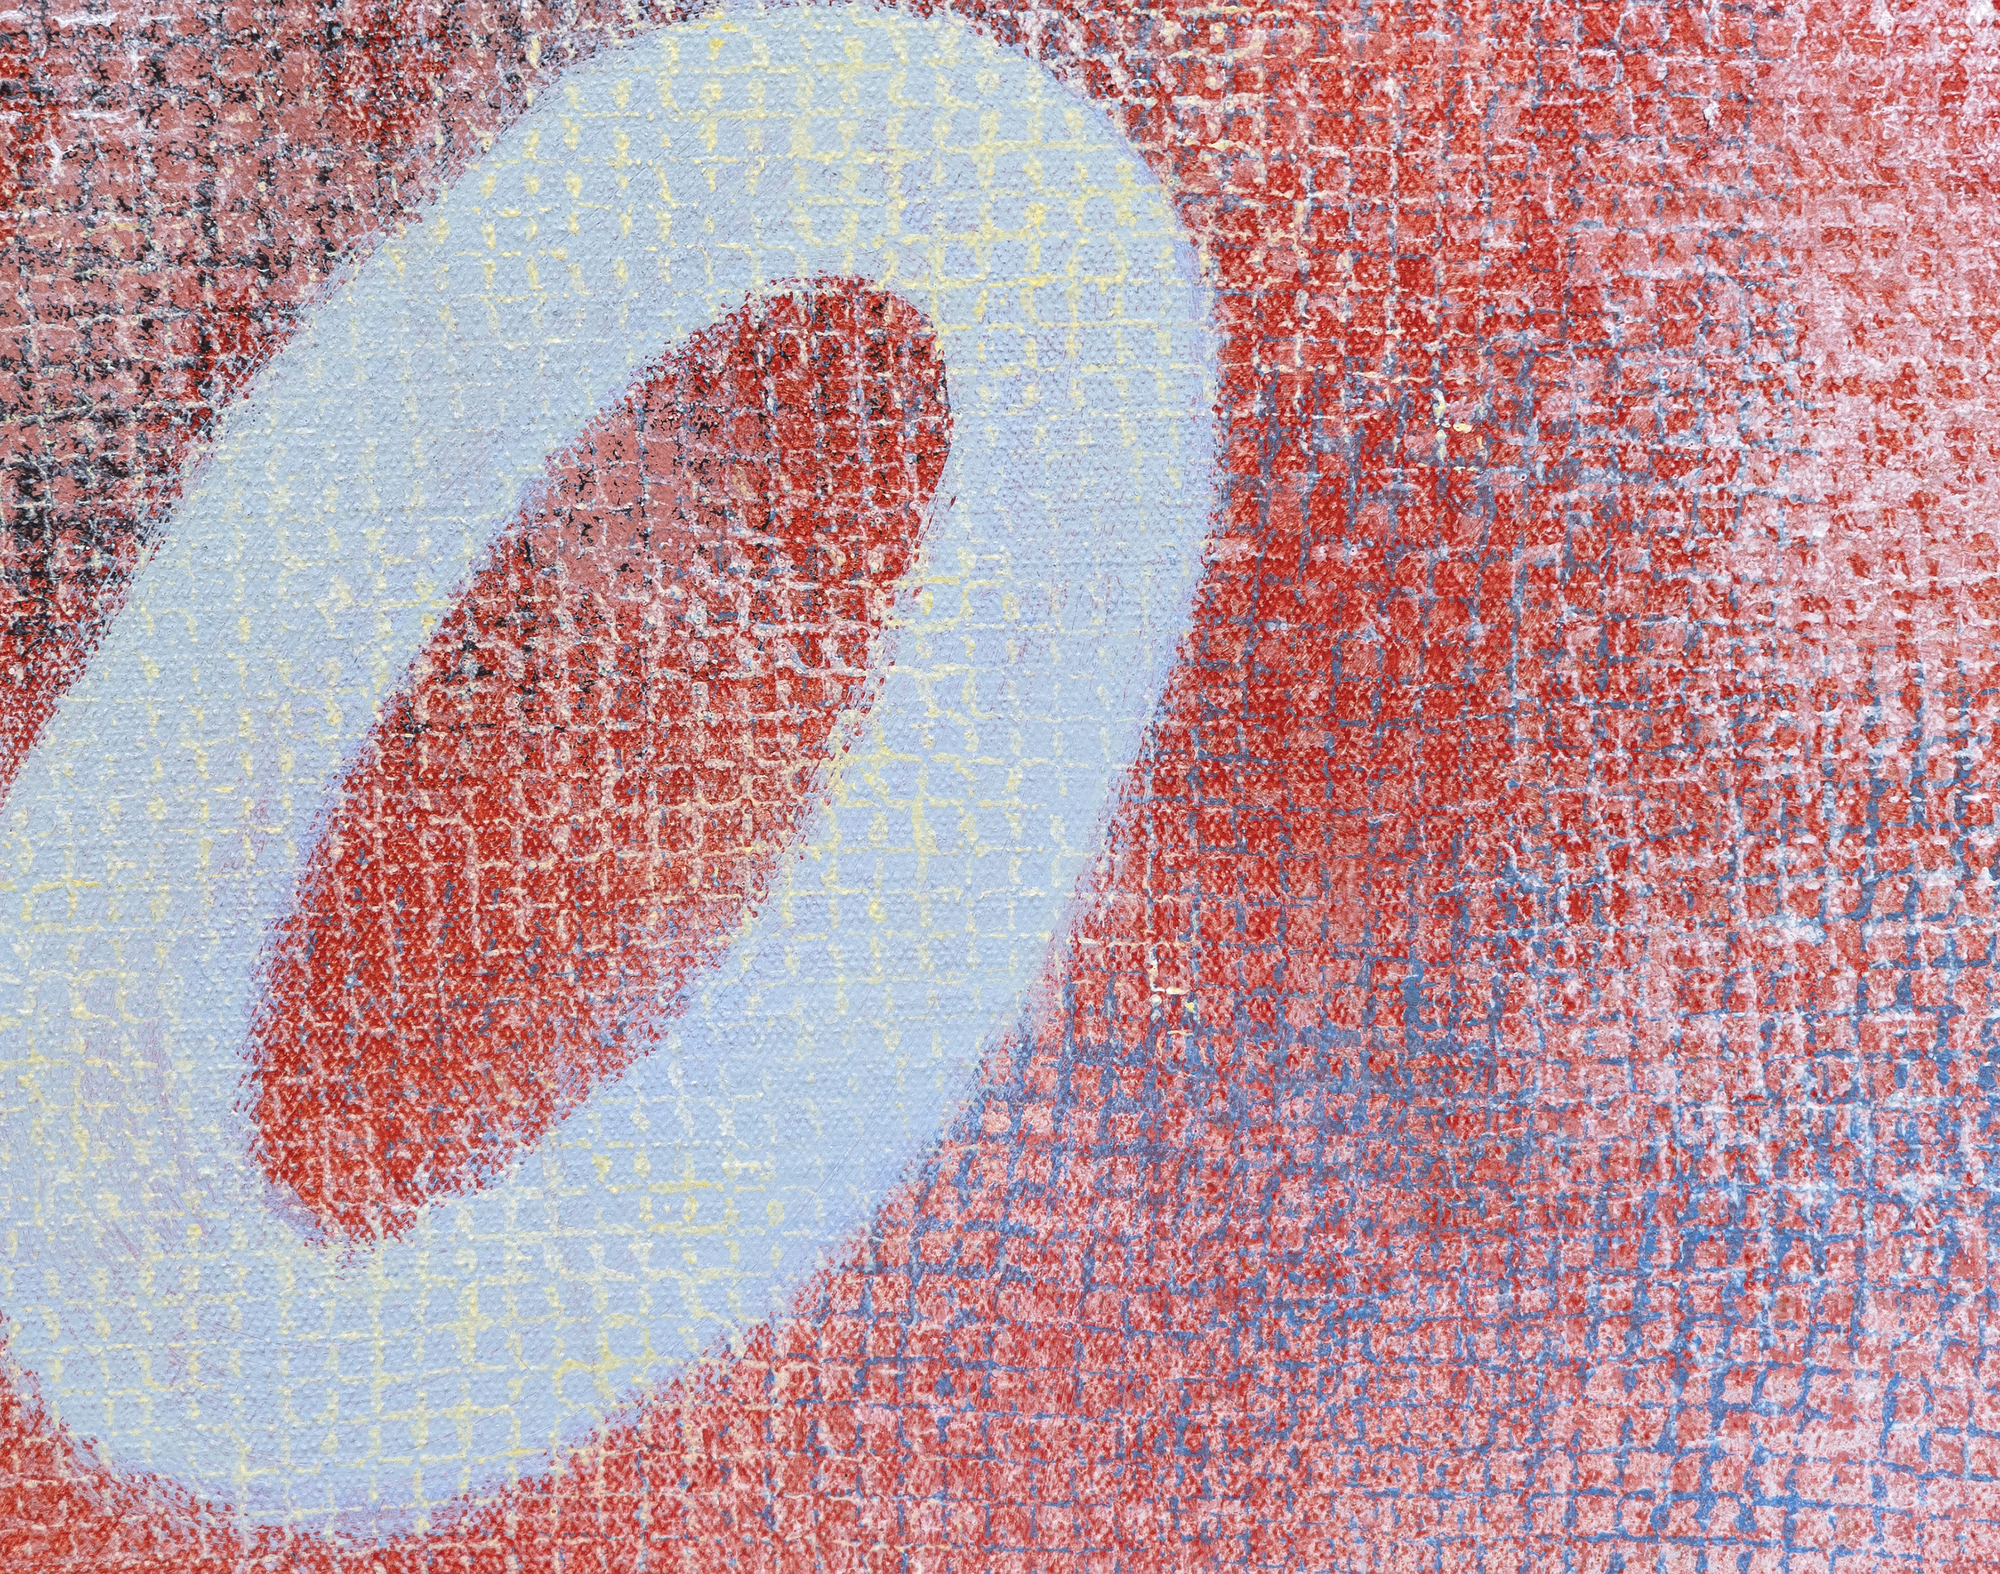 ROBERT NATKIN - Bern Series - acrylic on canvas - 48 x 53 in.